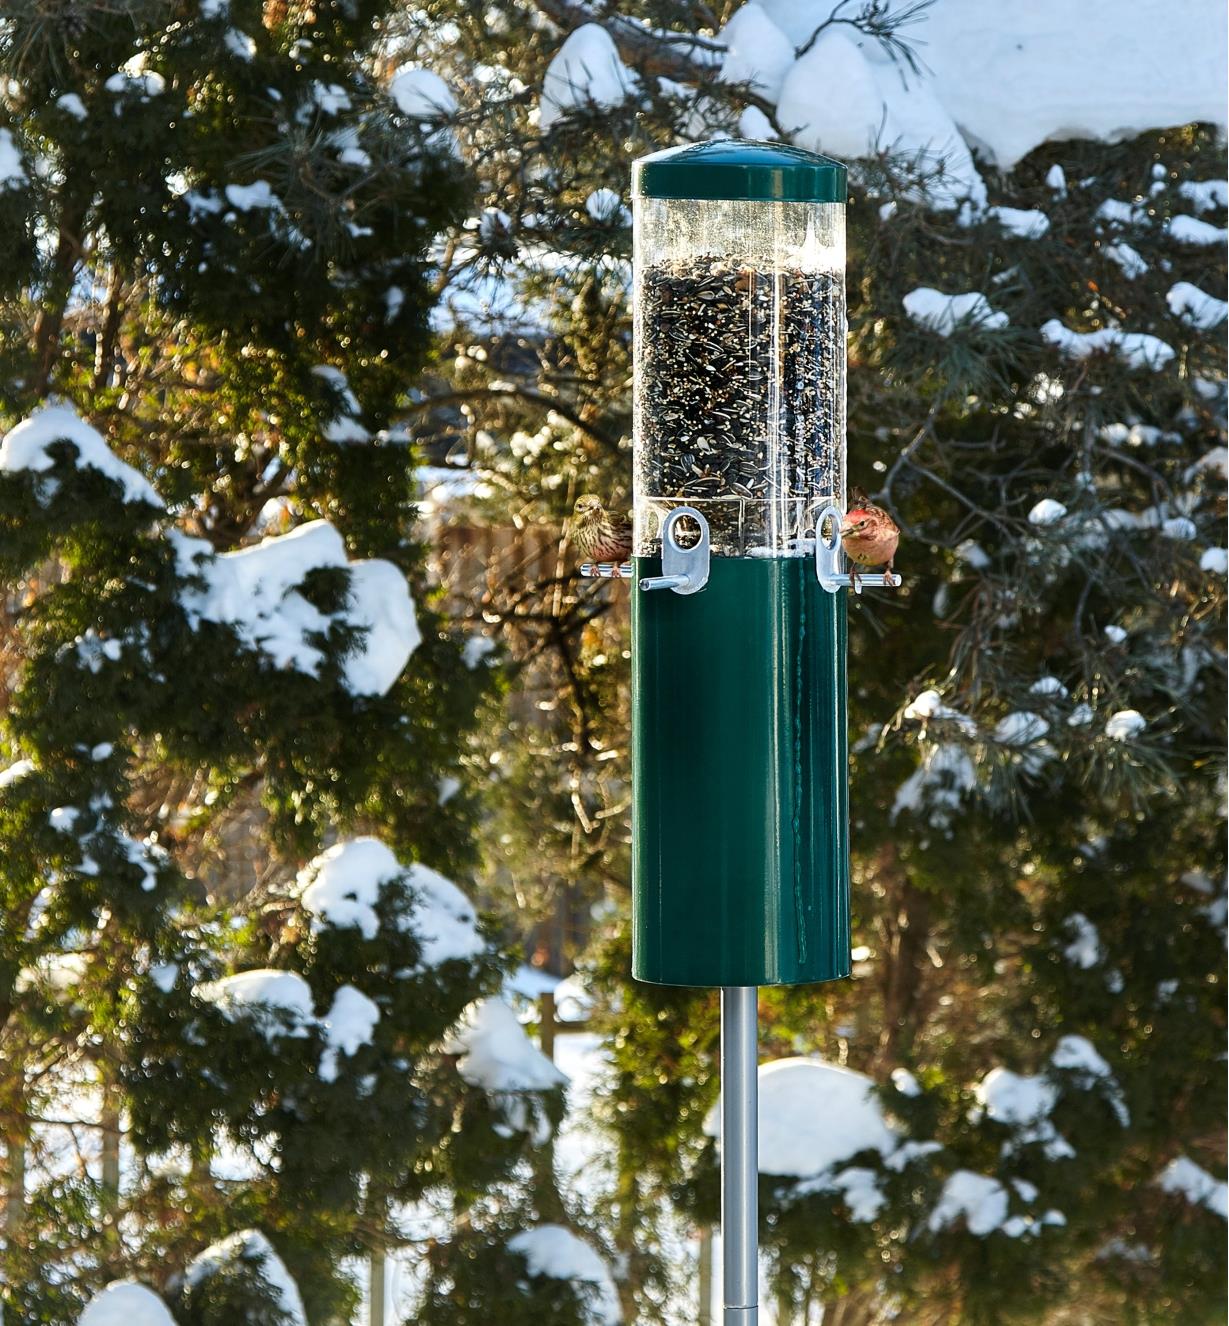 Squirrel-Proof Bird Feeder mounted in a yard in winter